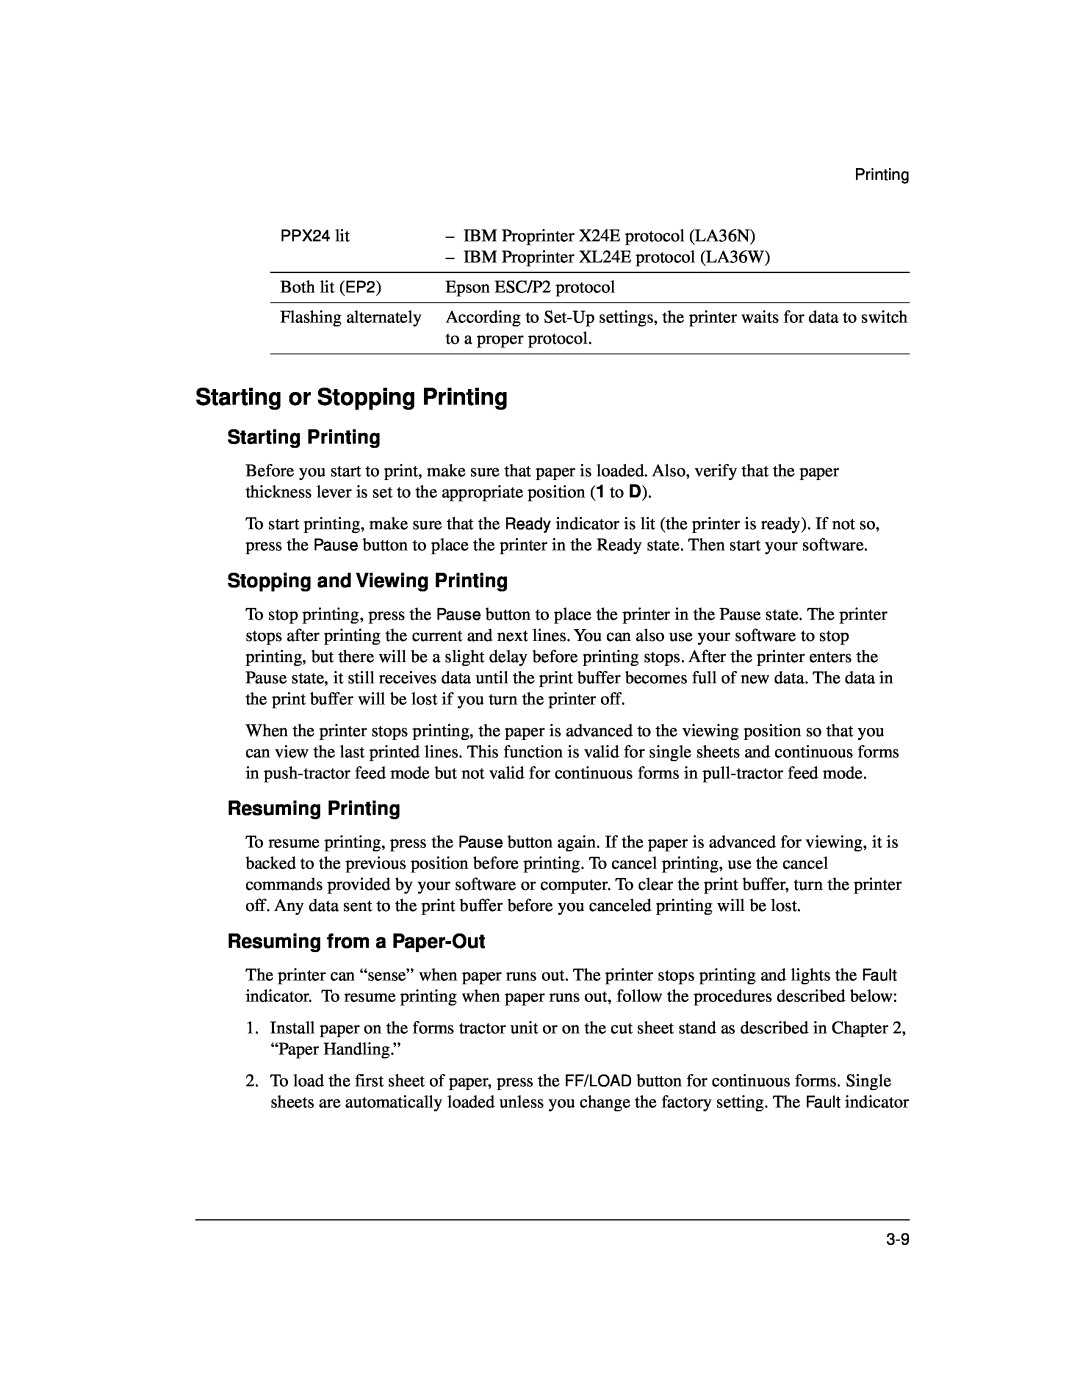 Genicom LA36 manual Starting or Stopping Printing, Starting Printing, Stopping and Viewing Printing, Resuming Printing 